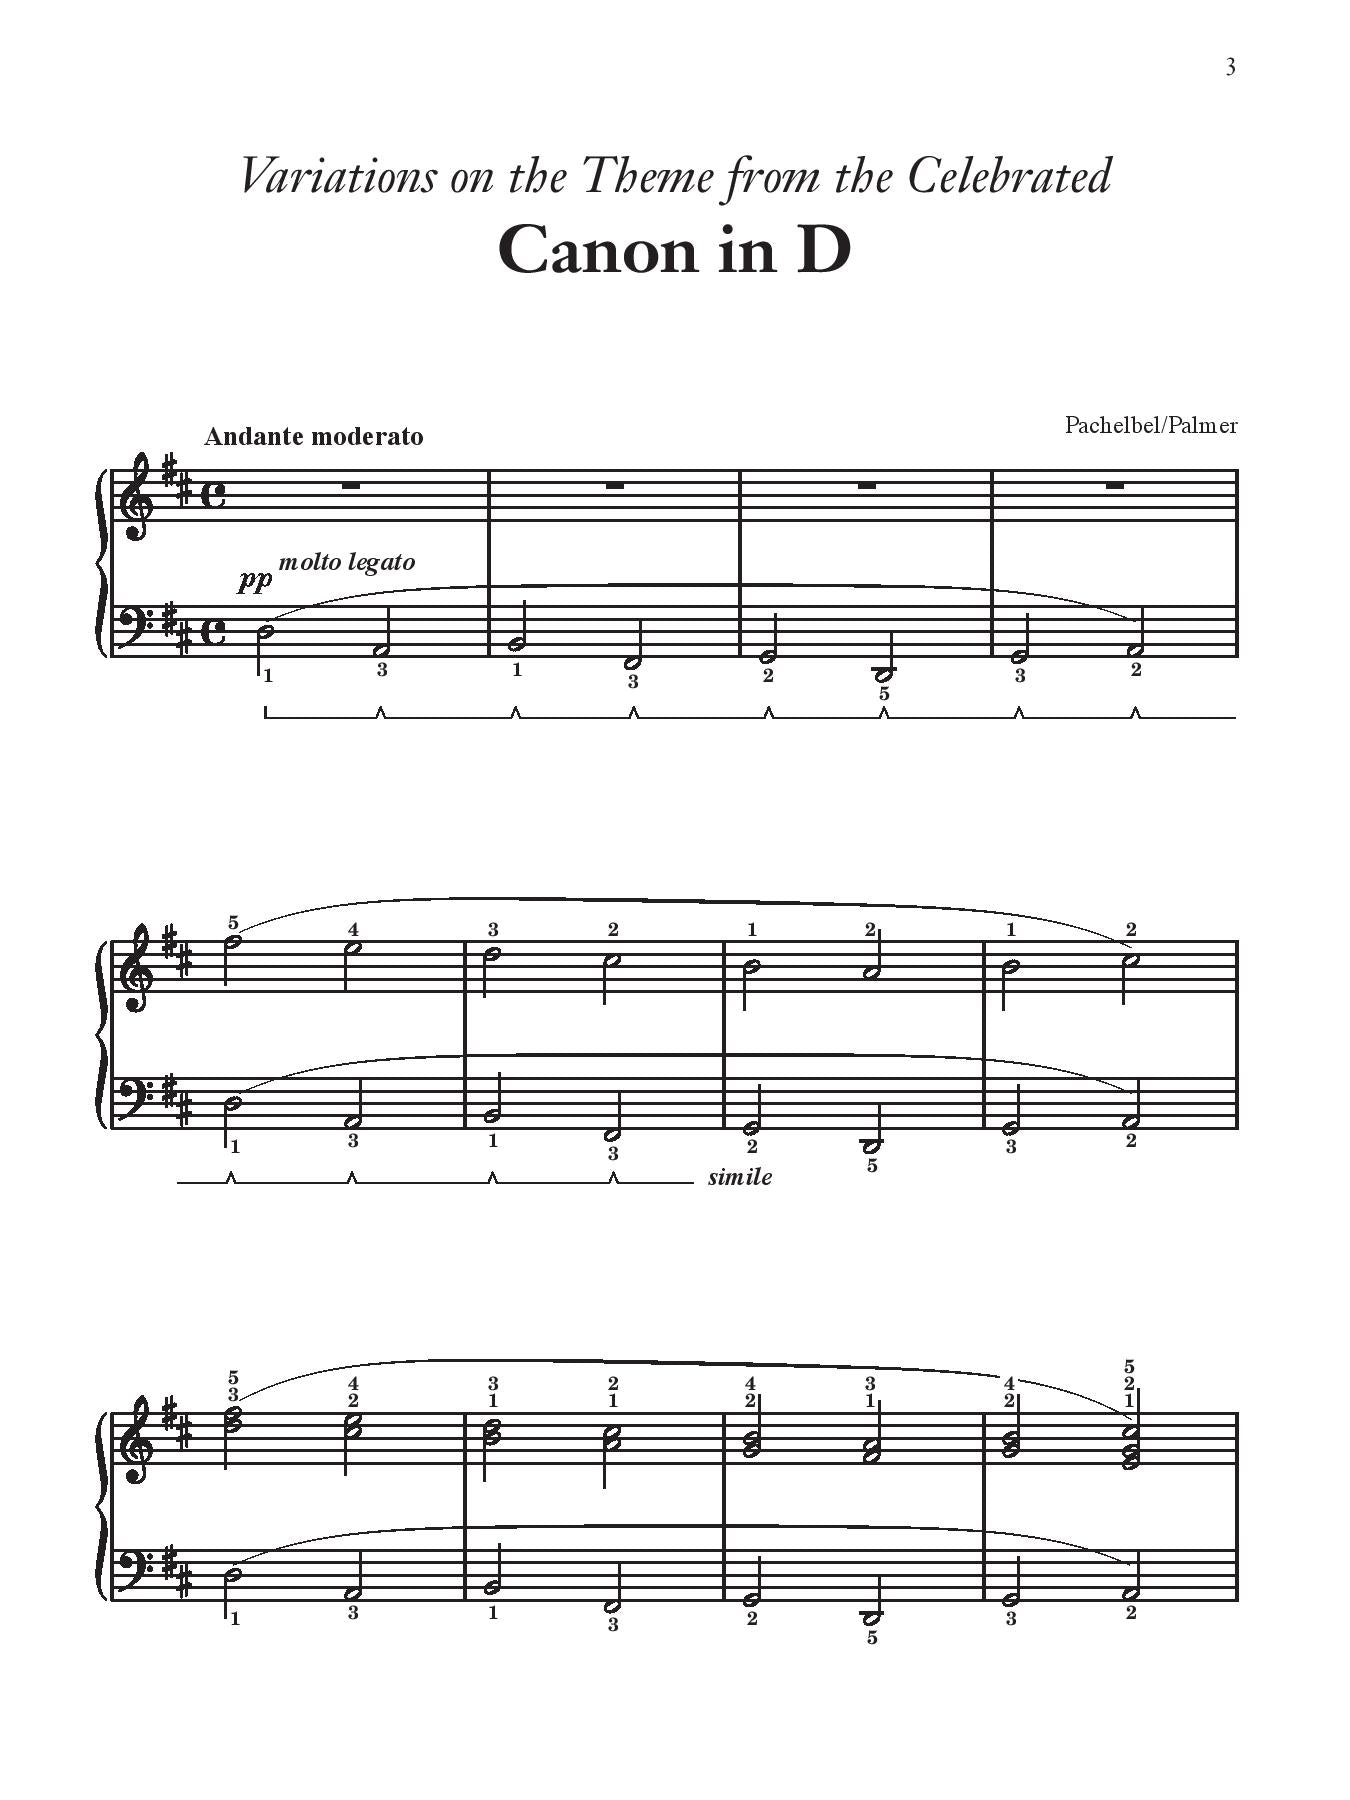 Pachelbel: Canon in D for Piano Solo